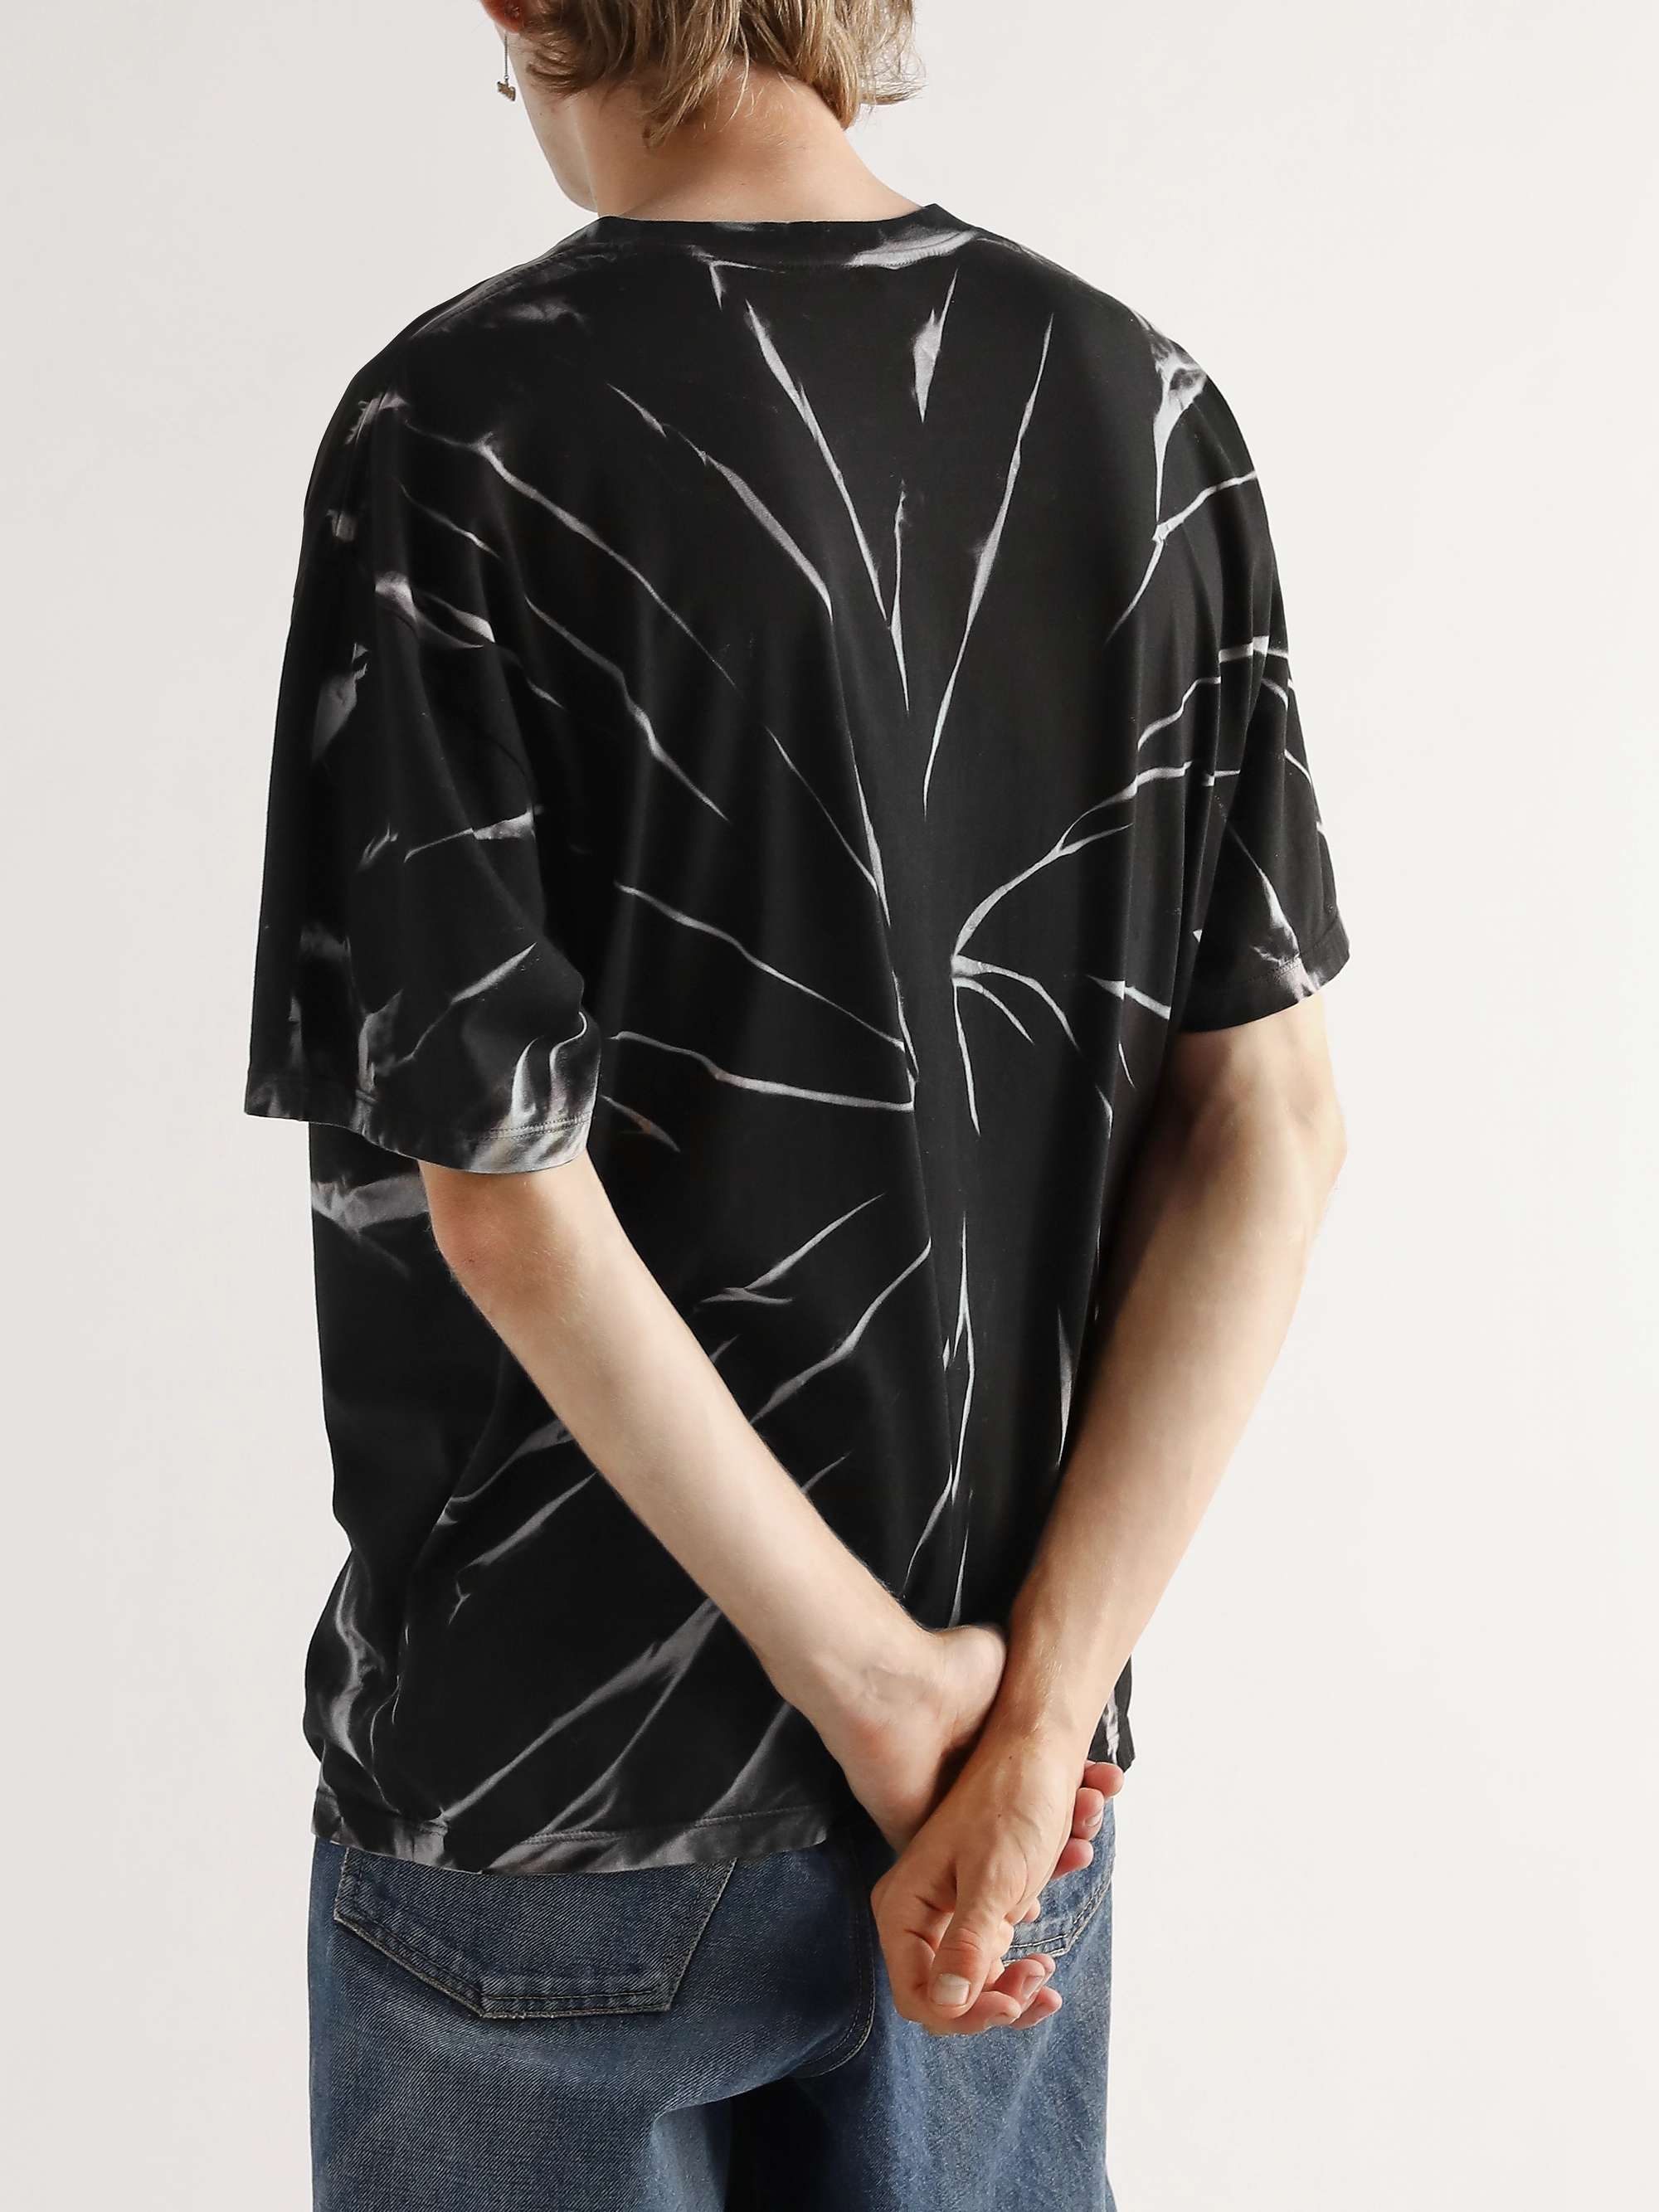 CELINE HOMME Tie-Dyed Logo-Print Cotton-Jersey T-Shirt for Men | MR PORTER